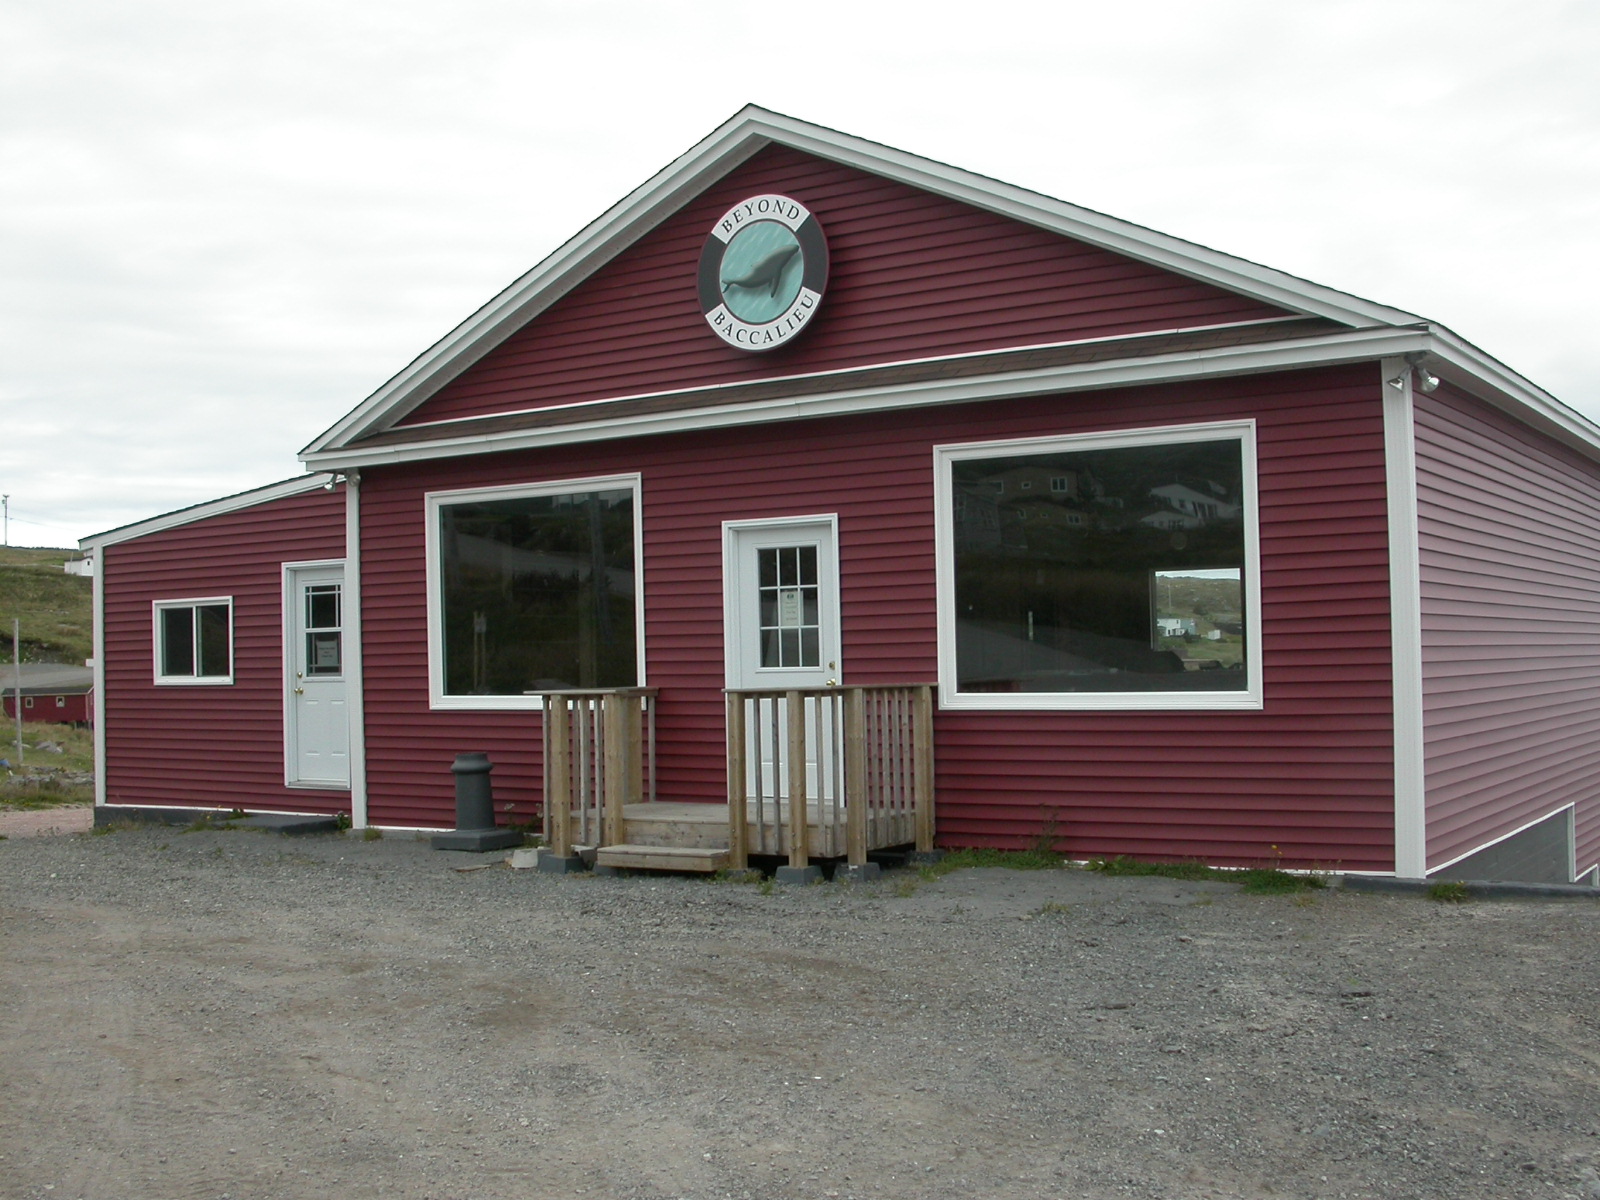 Beyond Baccalieu Restaurant and Gift Shop, Grates Cove, Newfoundland